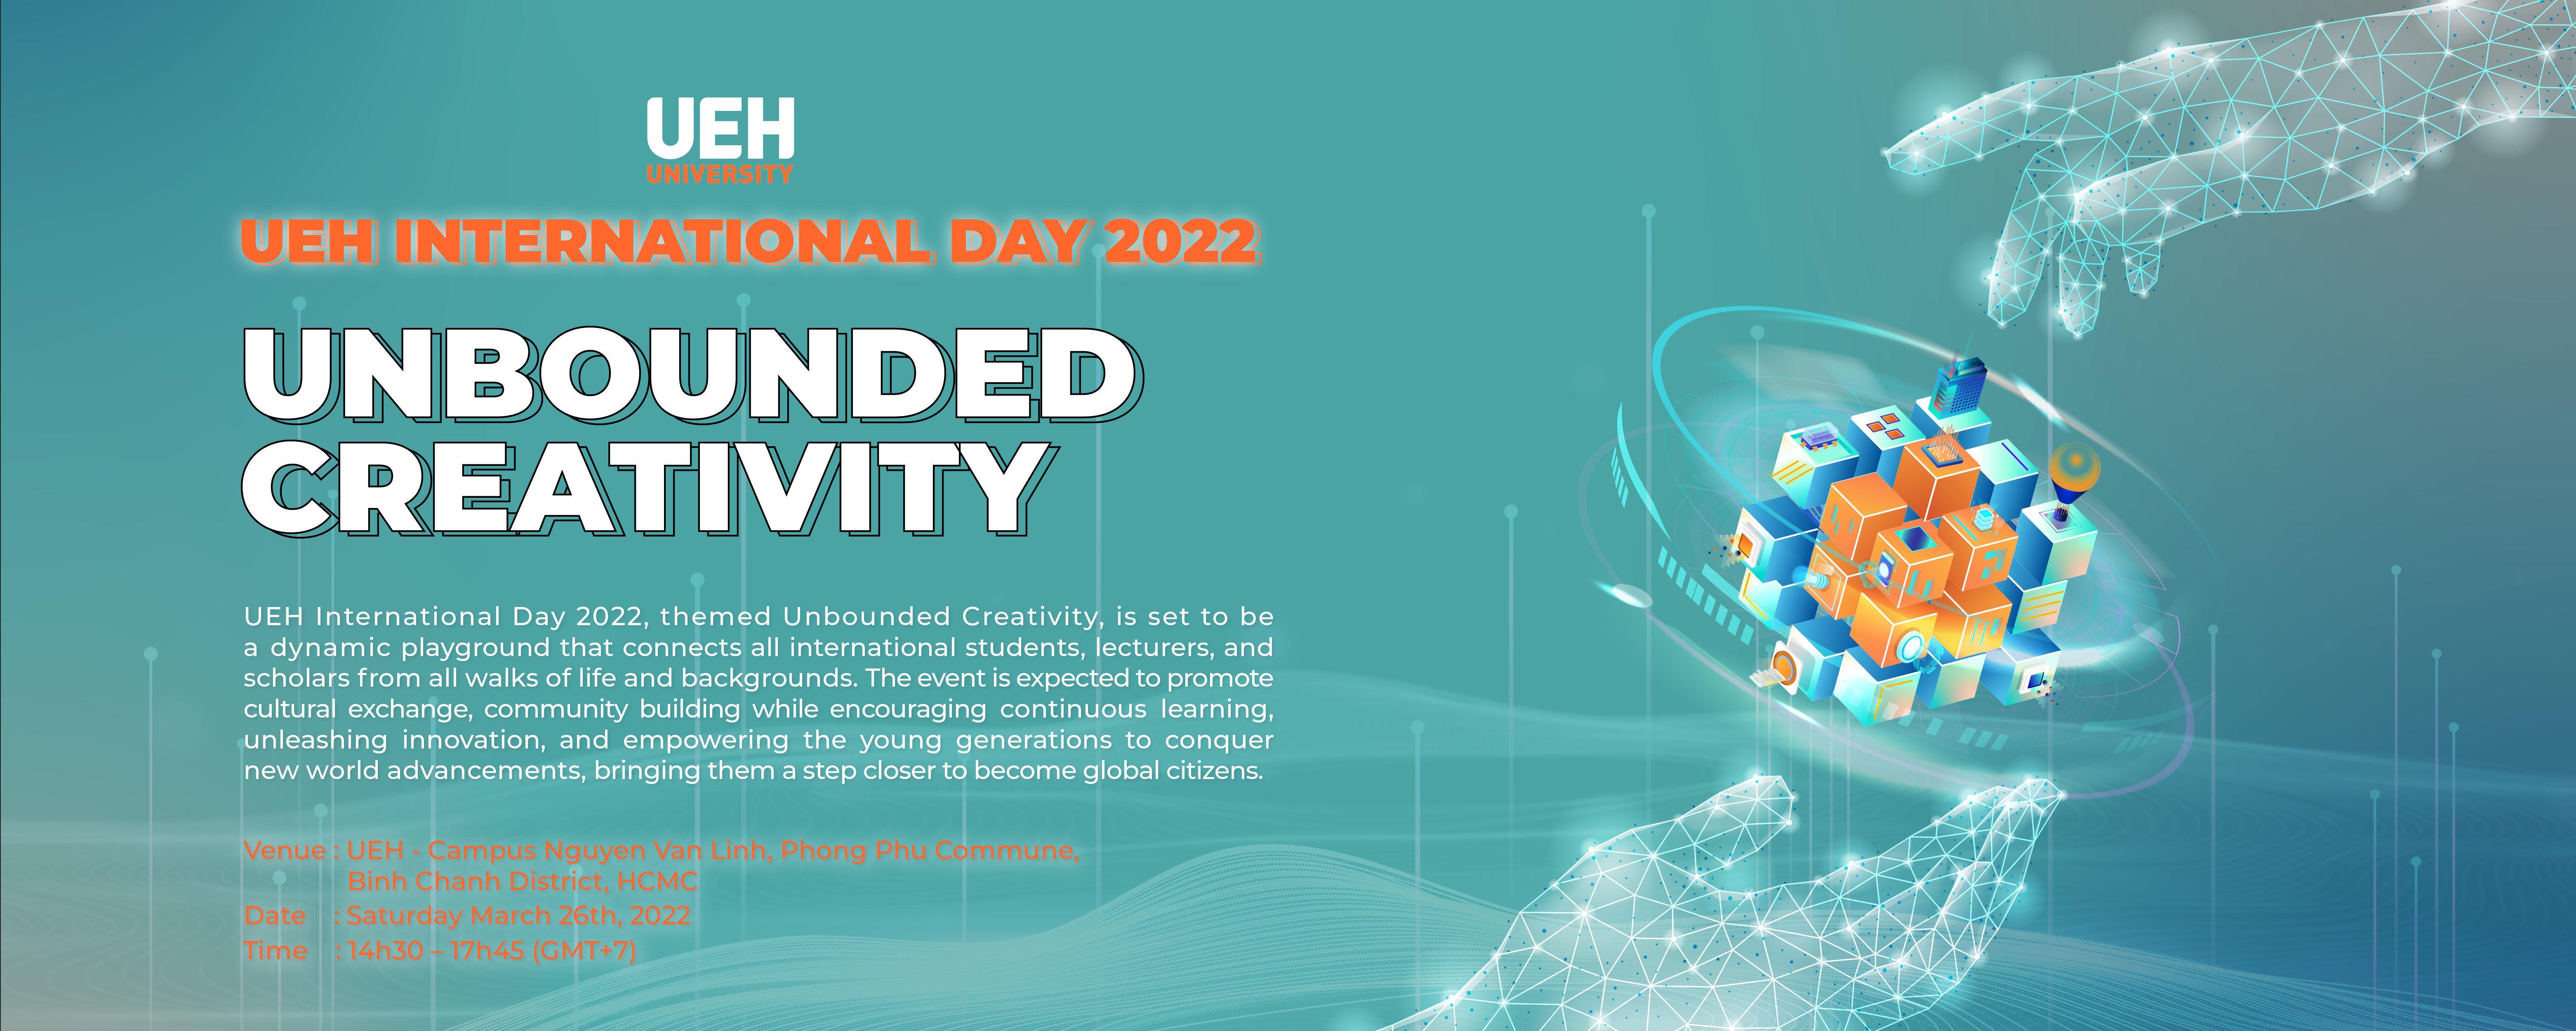 UEH International Day 2022 FINALLY HERE!